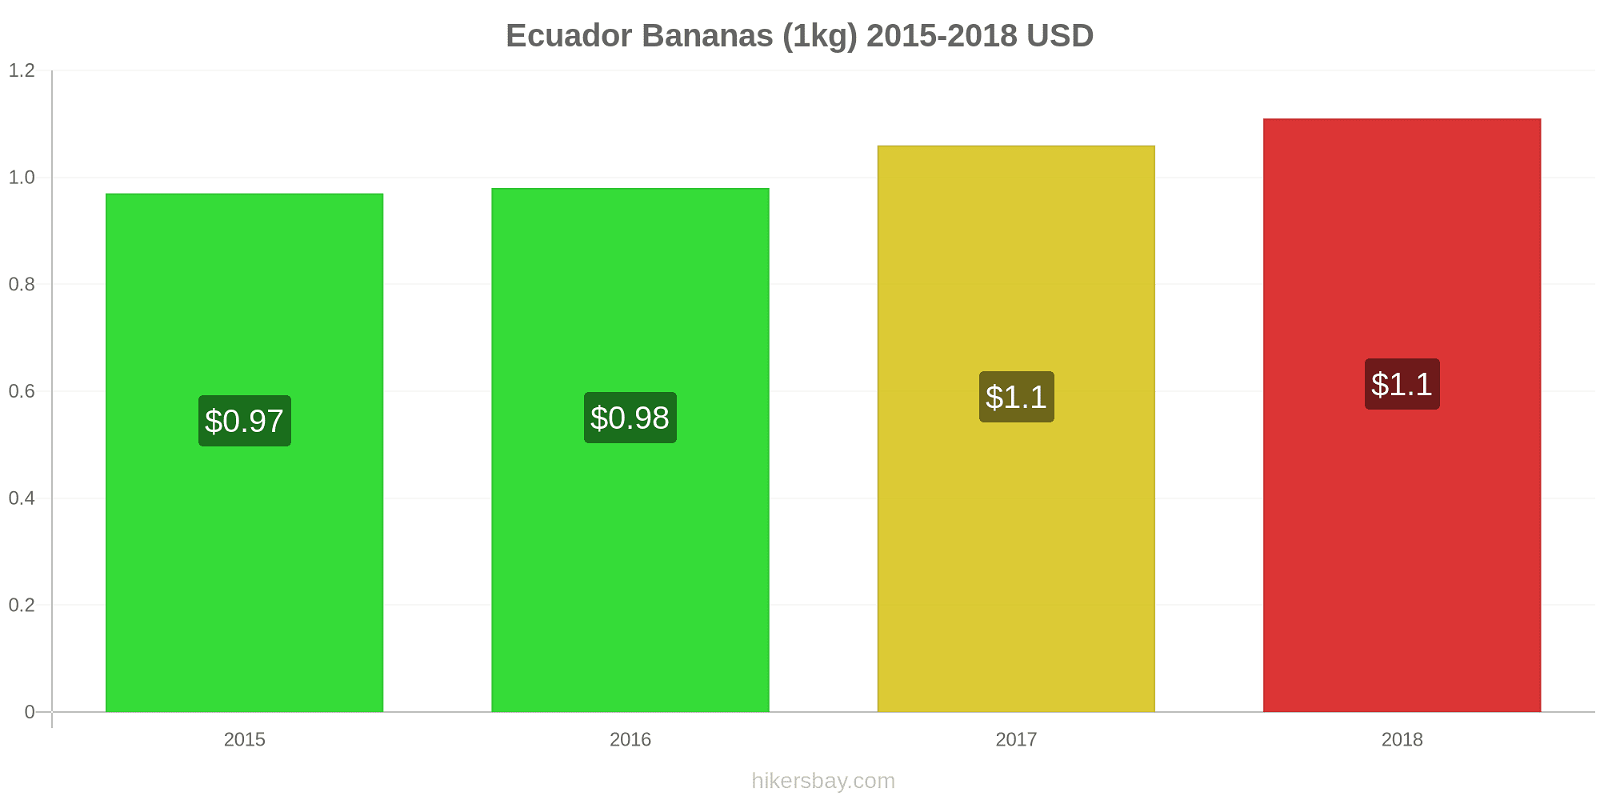 Ecuador price changes Bananas (1kg) hikersbay.com